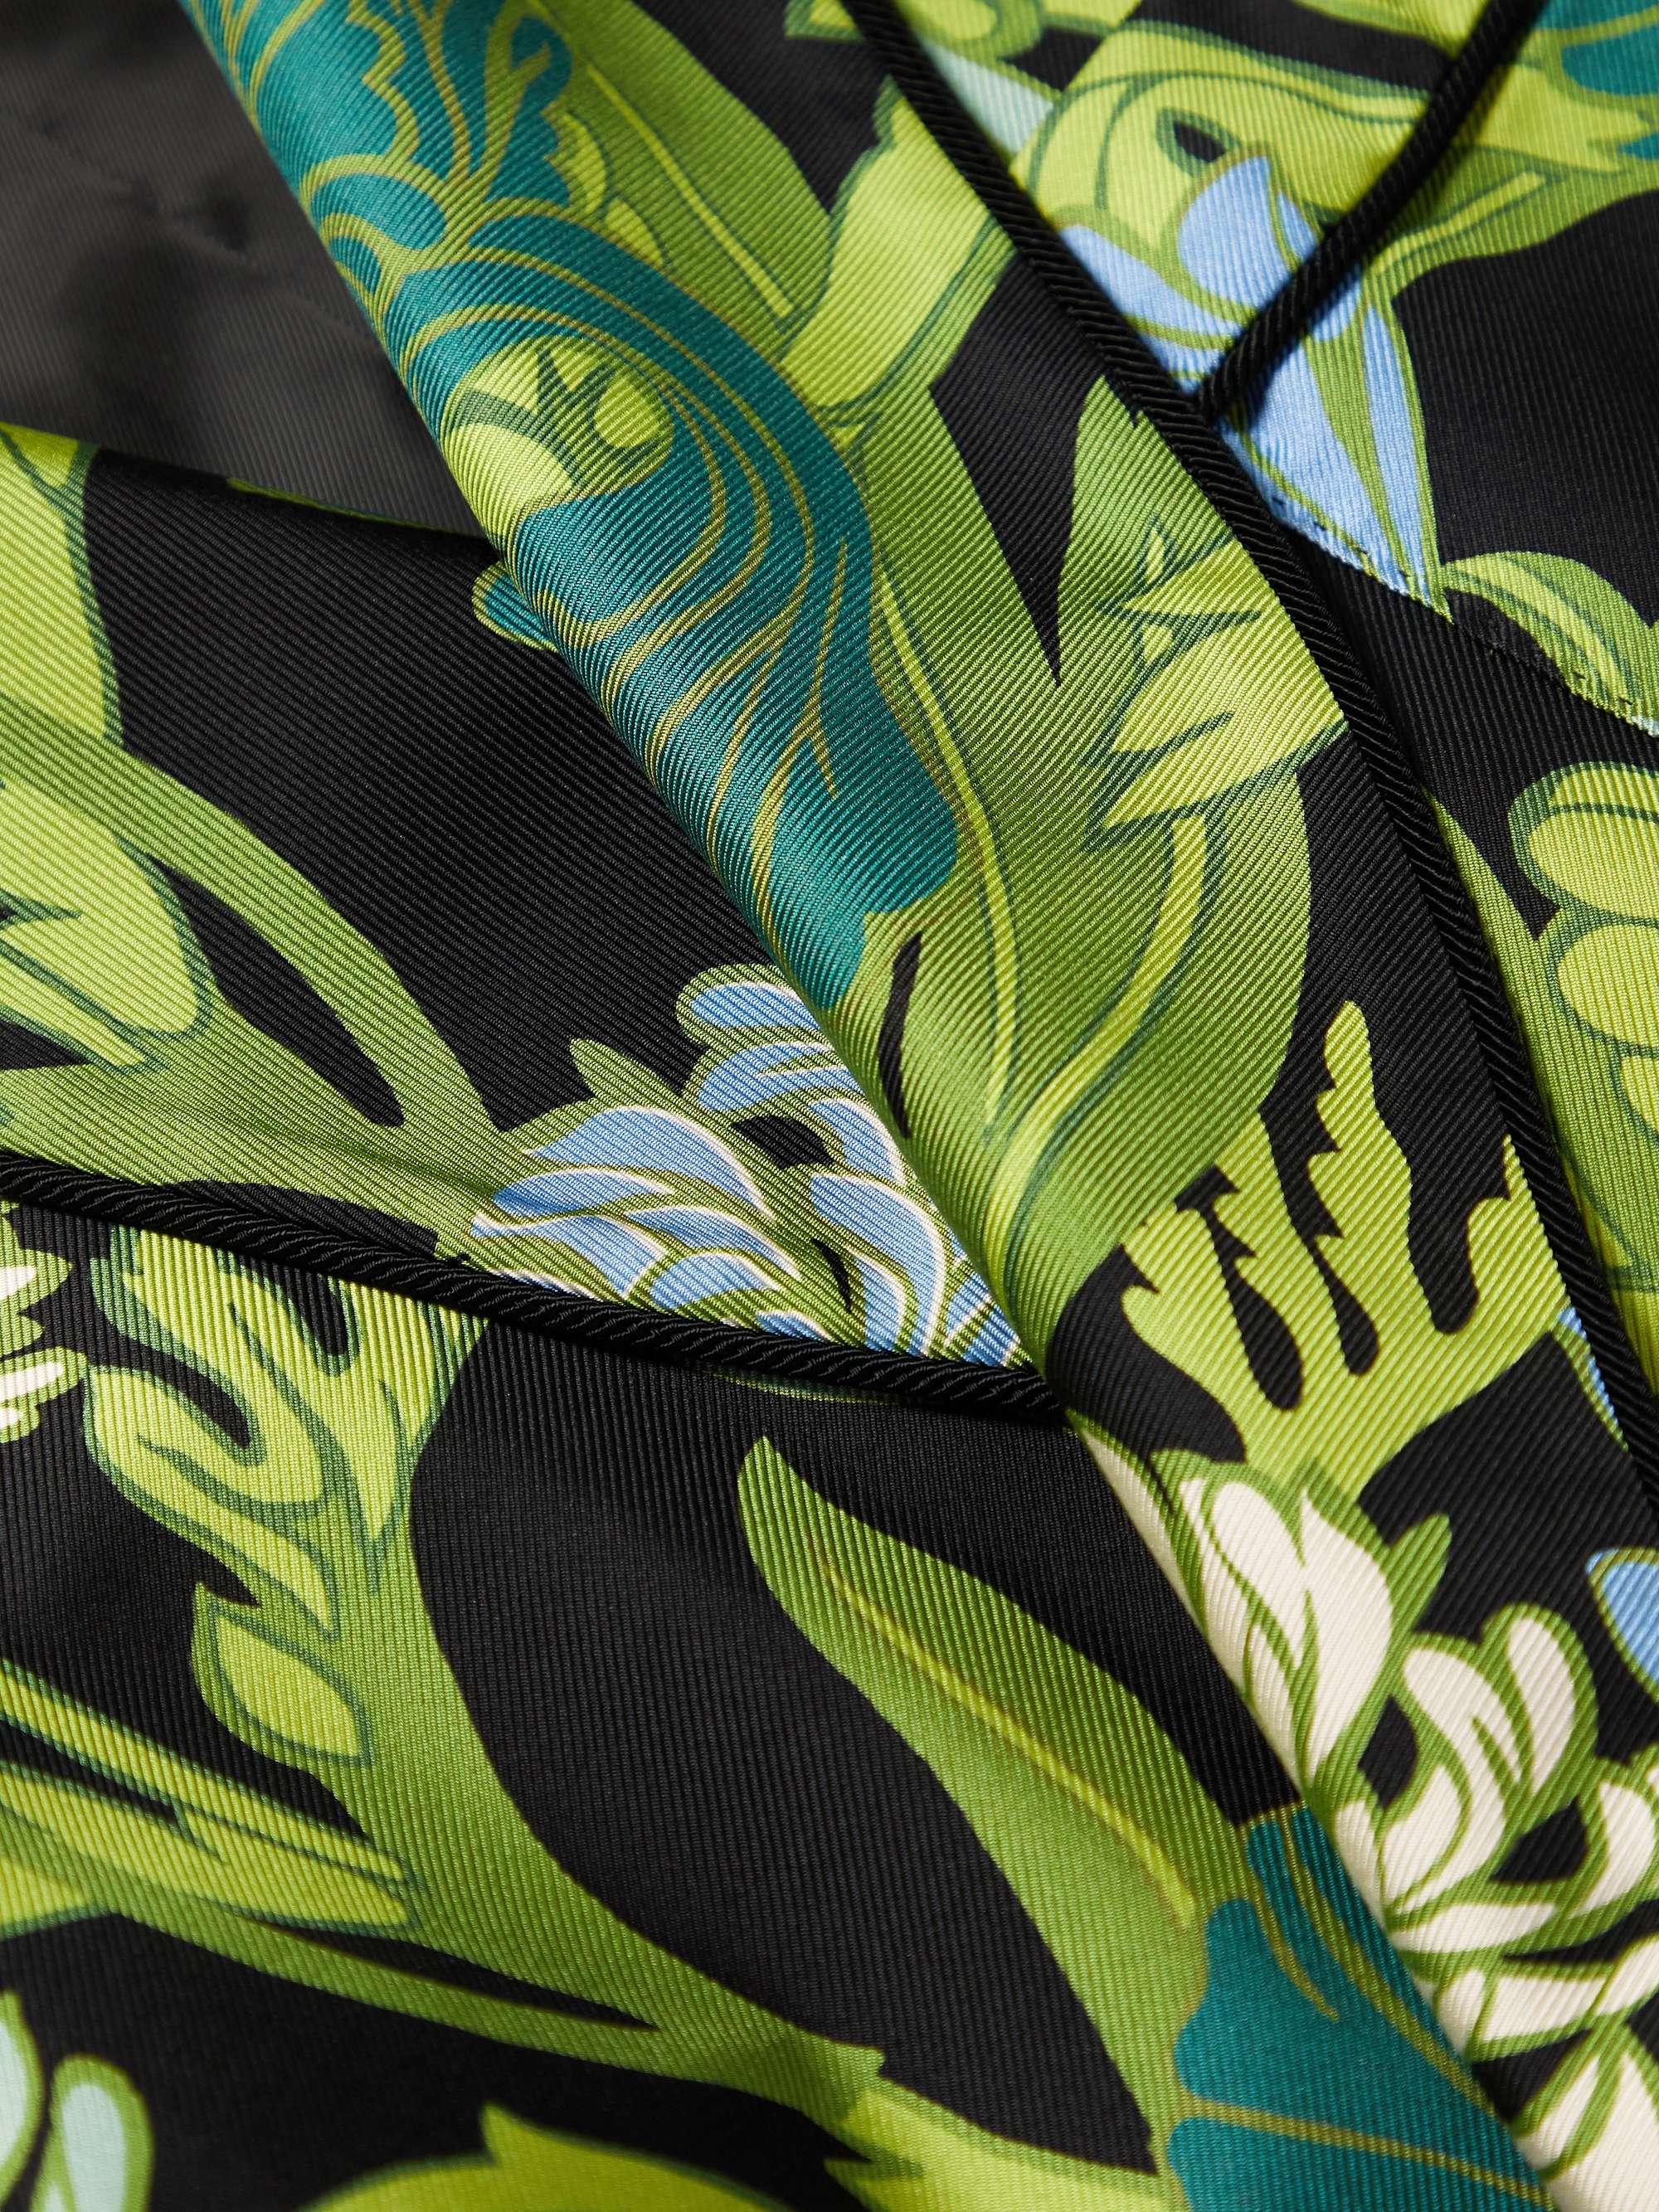 TOM FORD Floral-Print Silk-Twill Robe